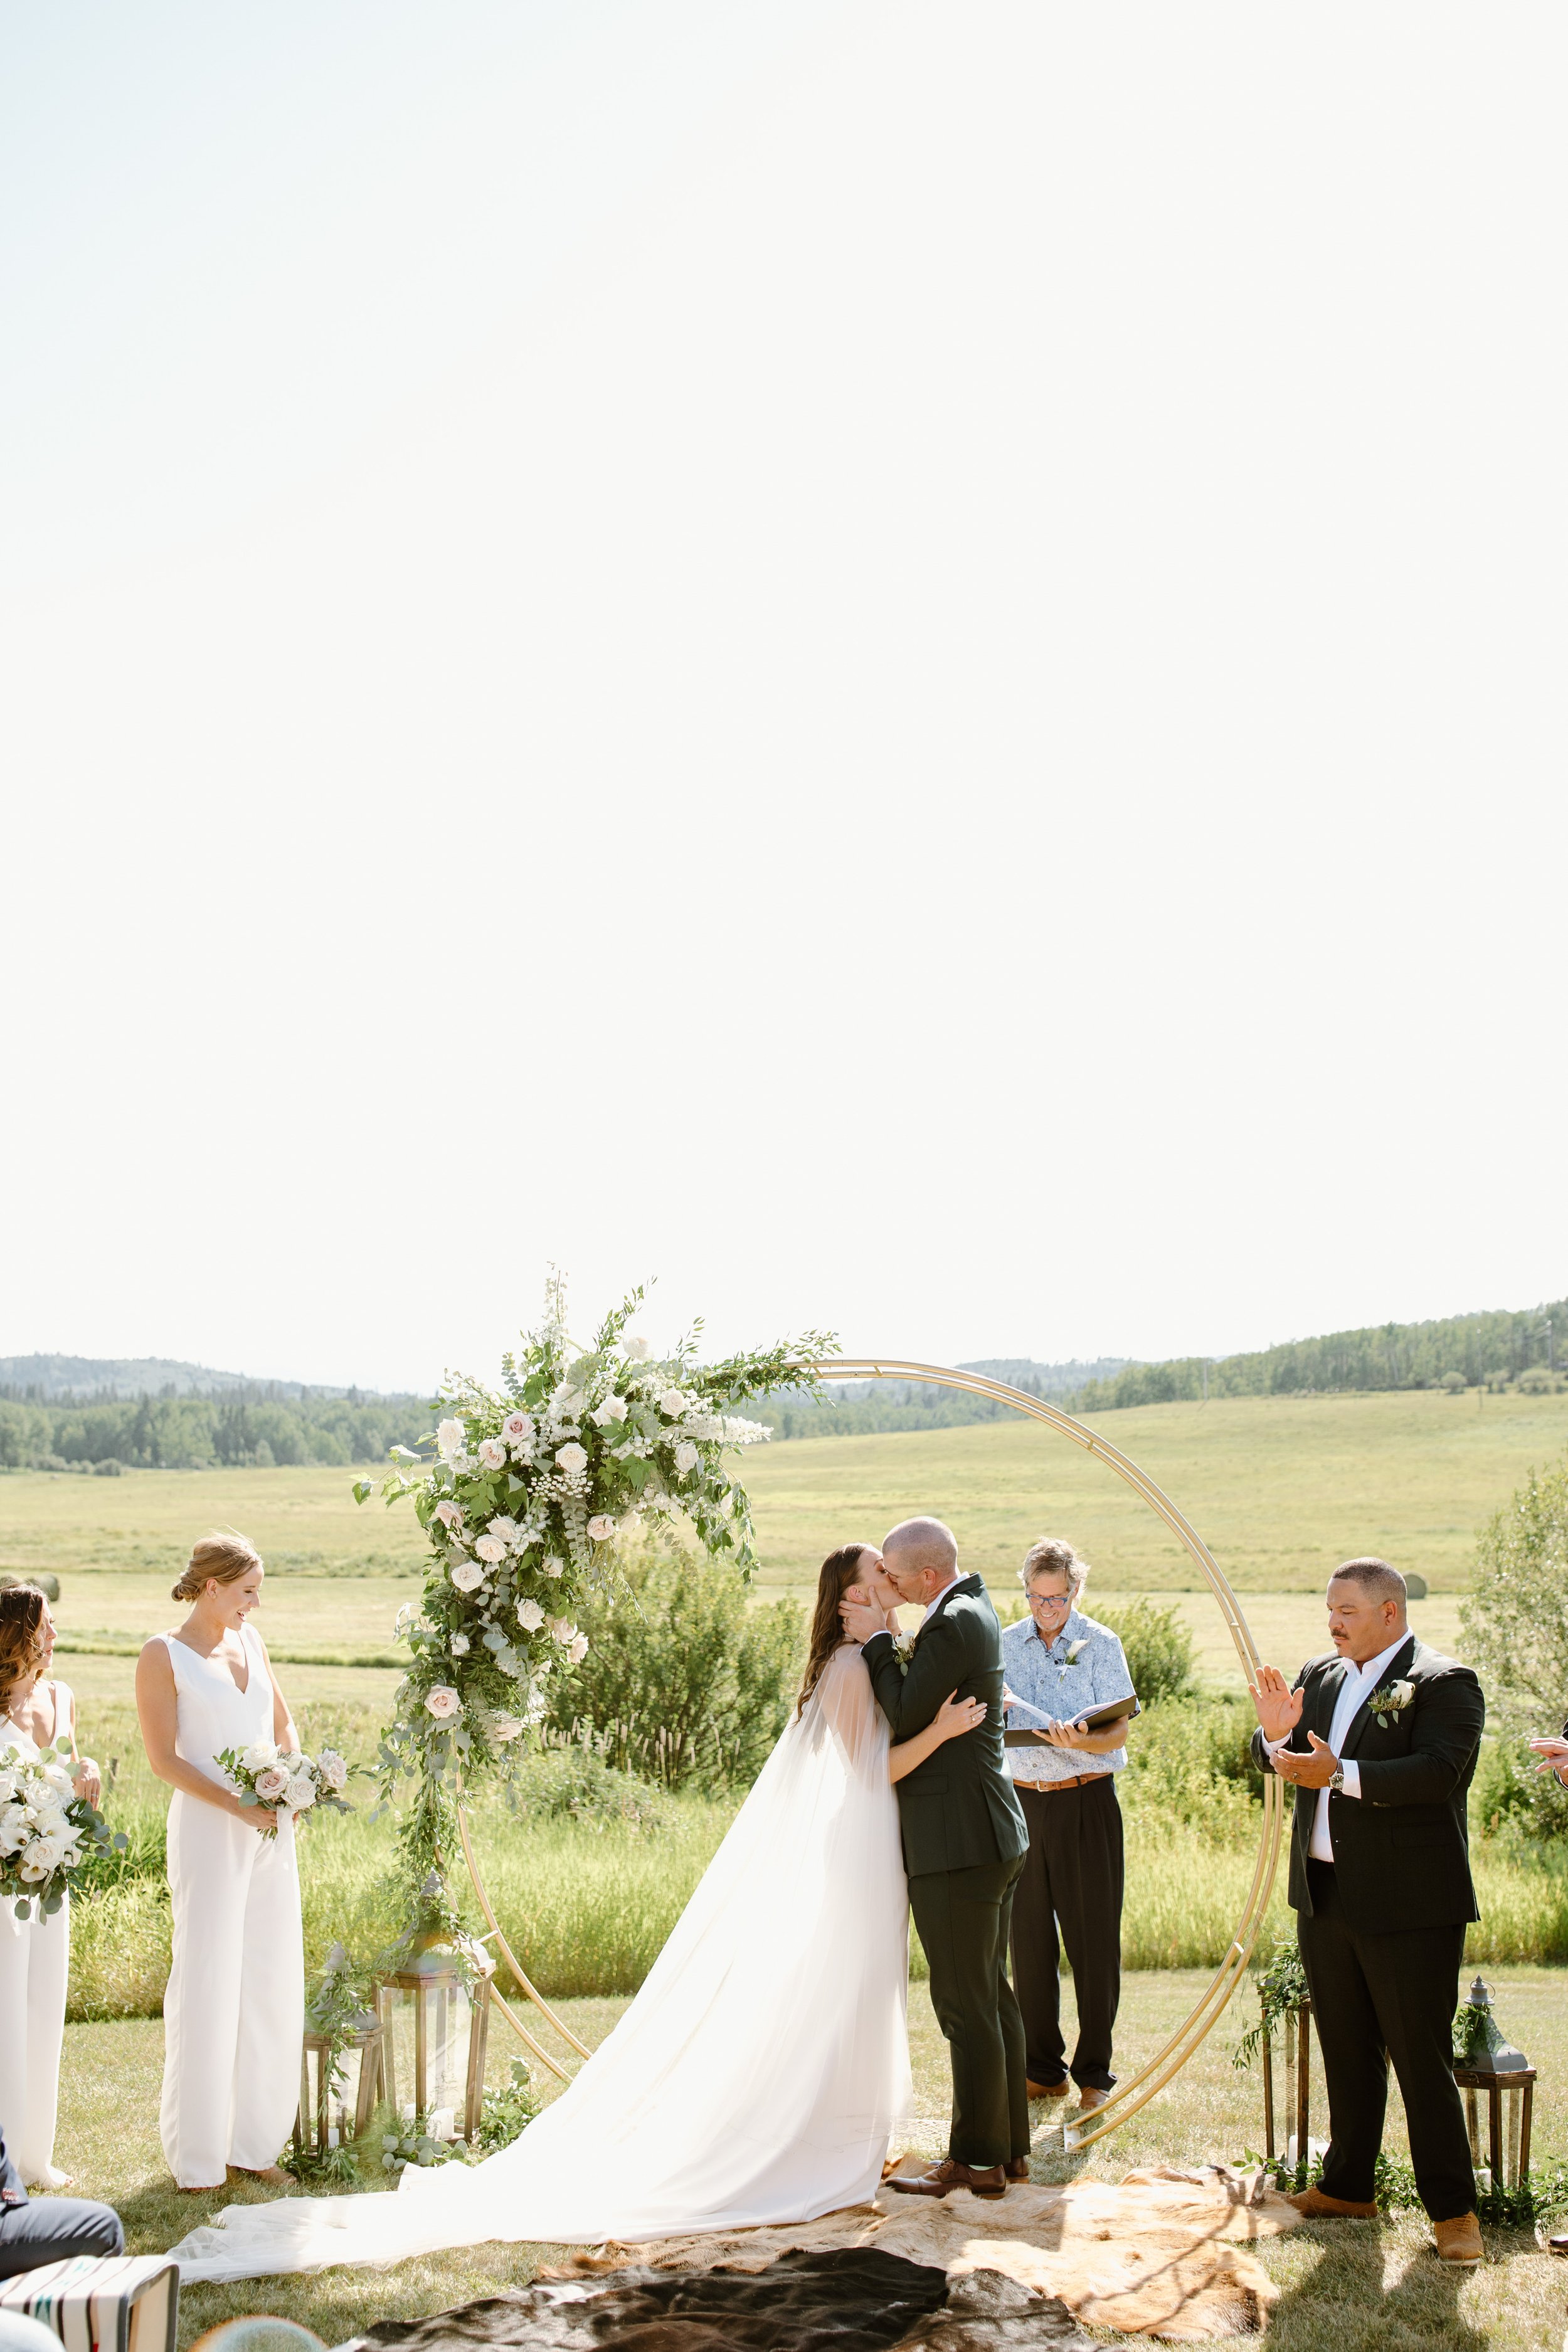 bragg-creek-alberta-mountain-bride-wedding-planning-129.jpg